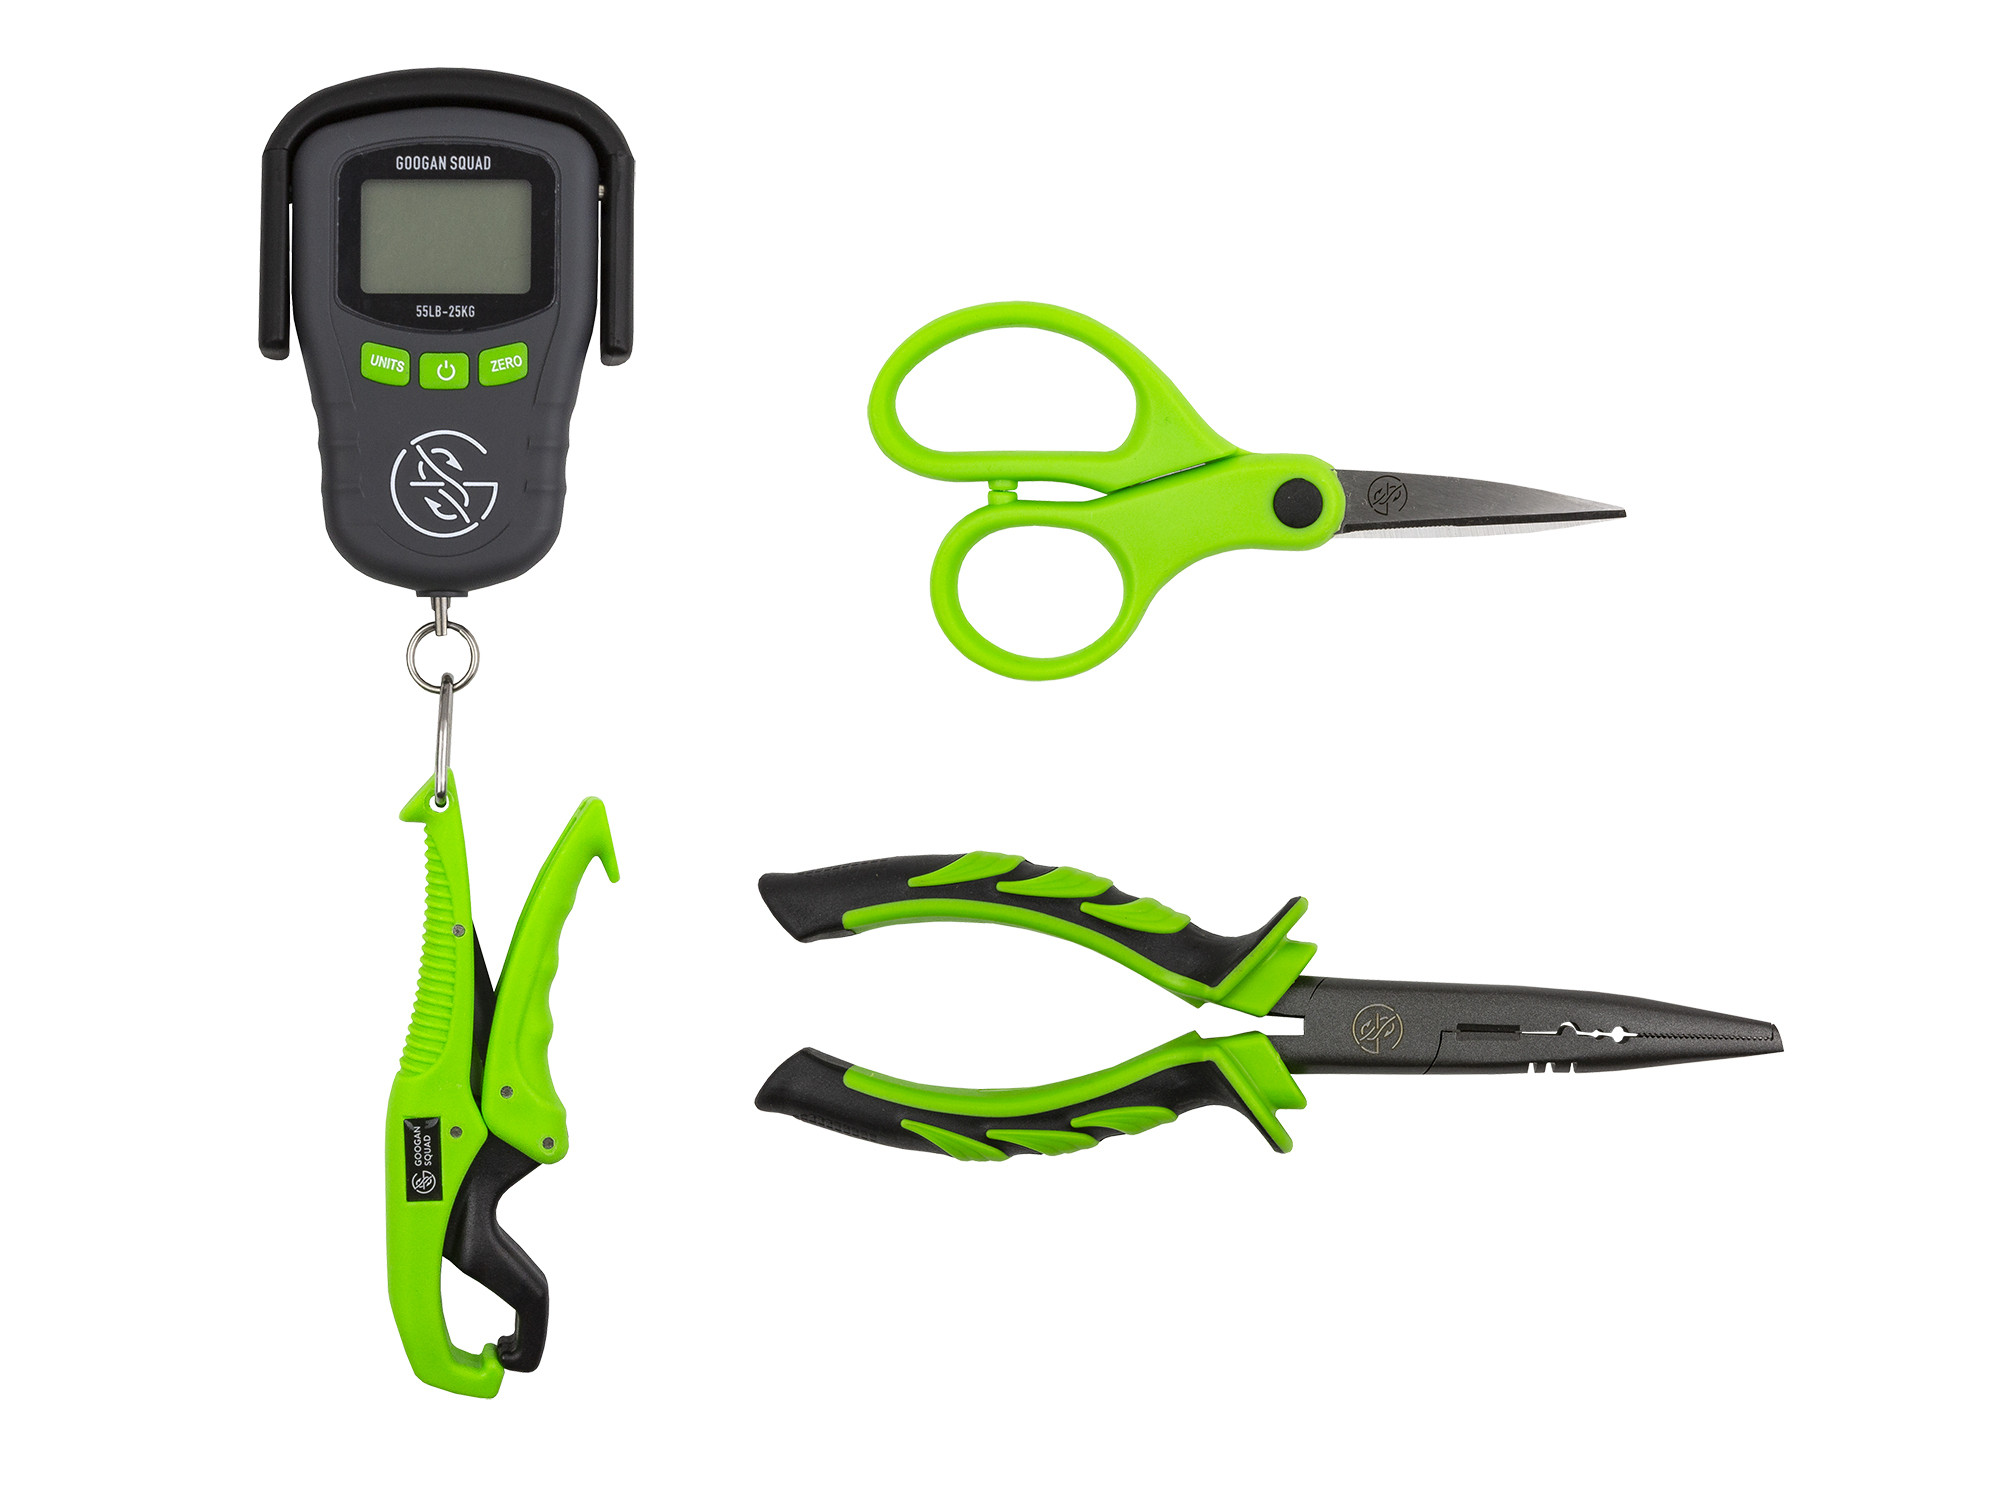 PB Products Cutter Pliers Scissors Tools 